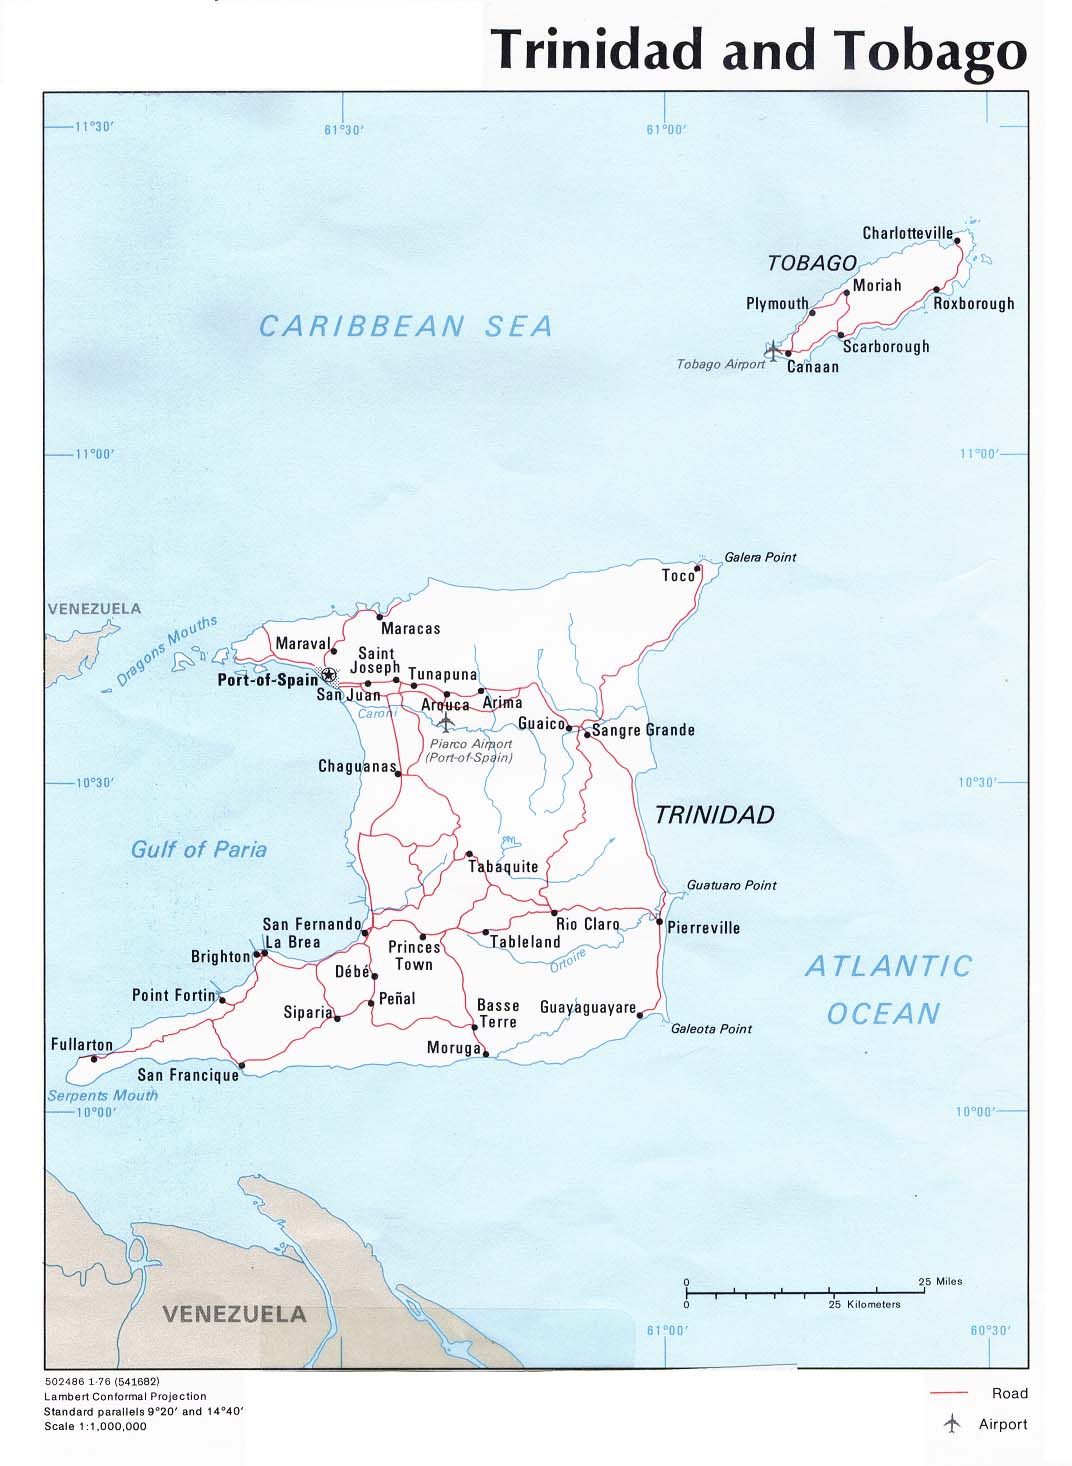 [Update] Bản đồ đất nước Trinidad và Tobago (Trinidad and Tobago Map) năm 2022 15